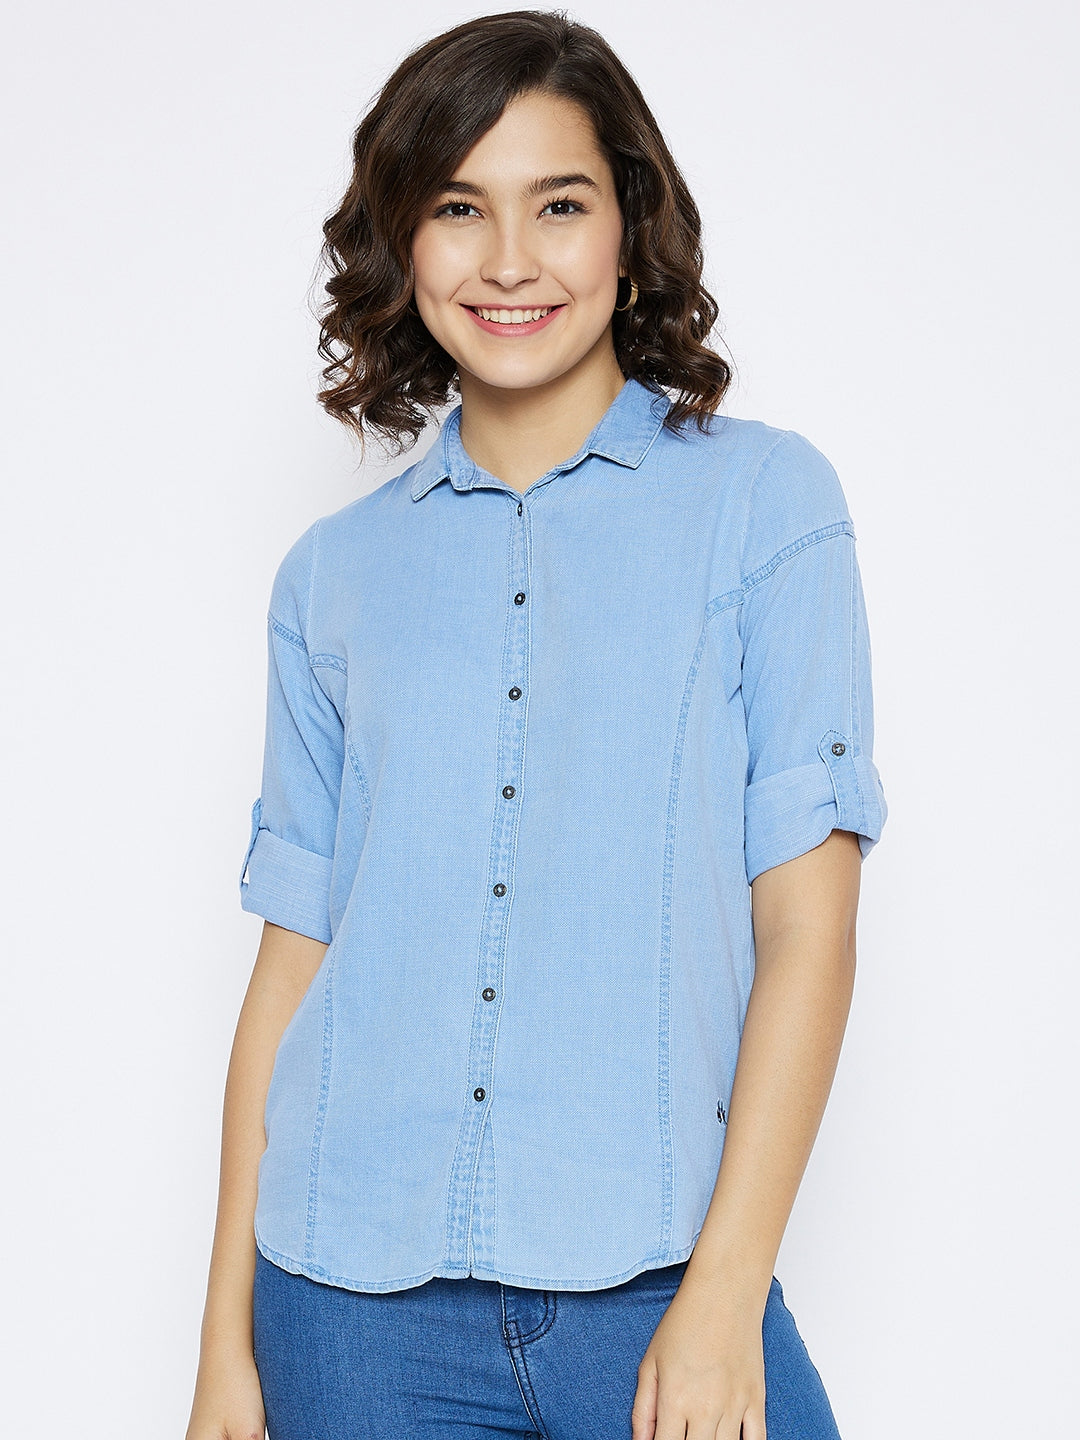 Blue Slim Fit Denim Shirt - Women Shirts